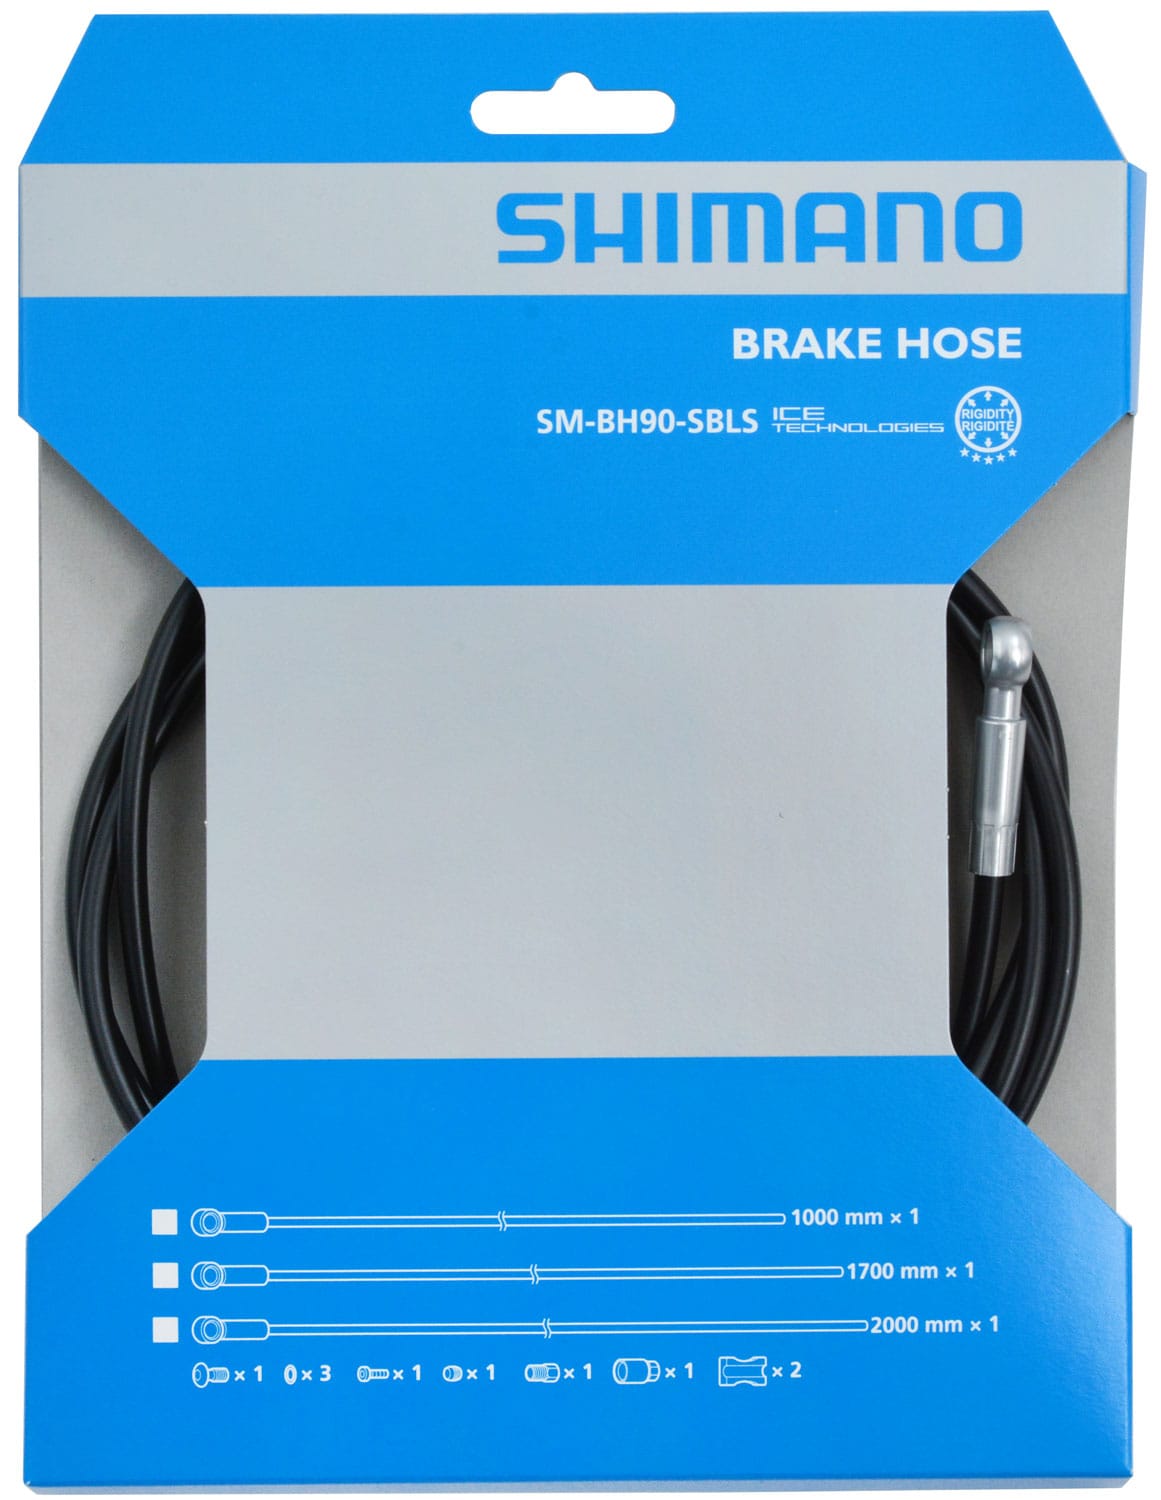 SHIMANO XT SM-BH90-SBLS BRAKE HOSE